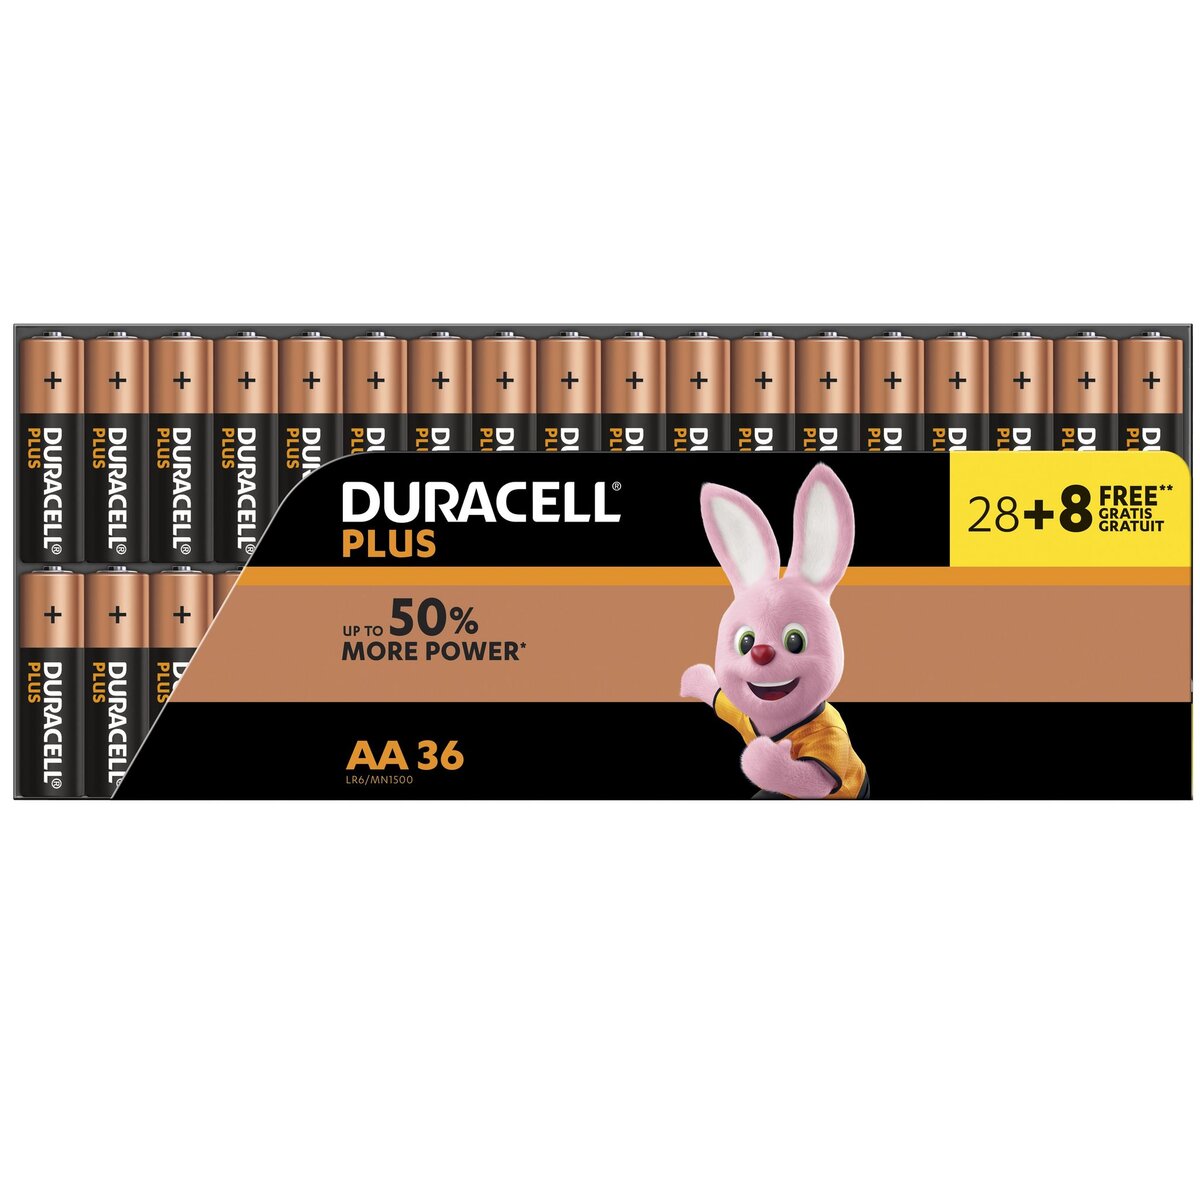 DURACELL Lot de 36 piles Alcalines type LR06 (AA) - Duracell Plus Power